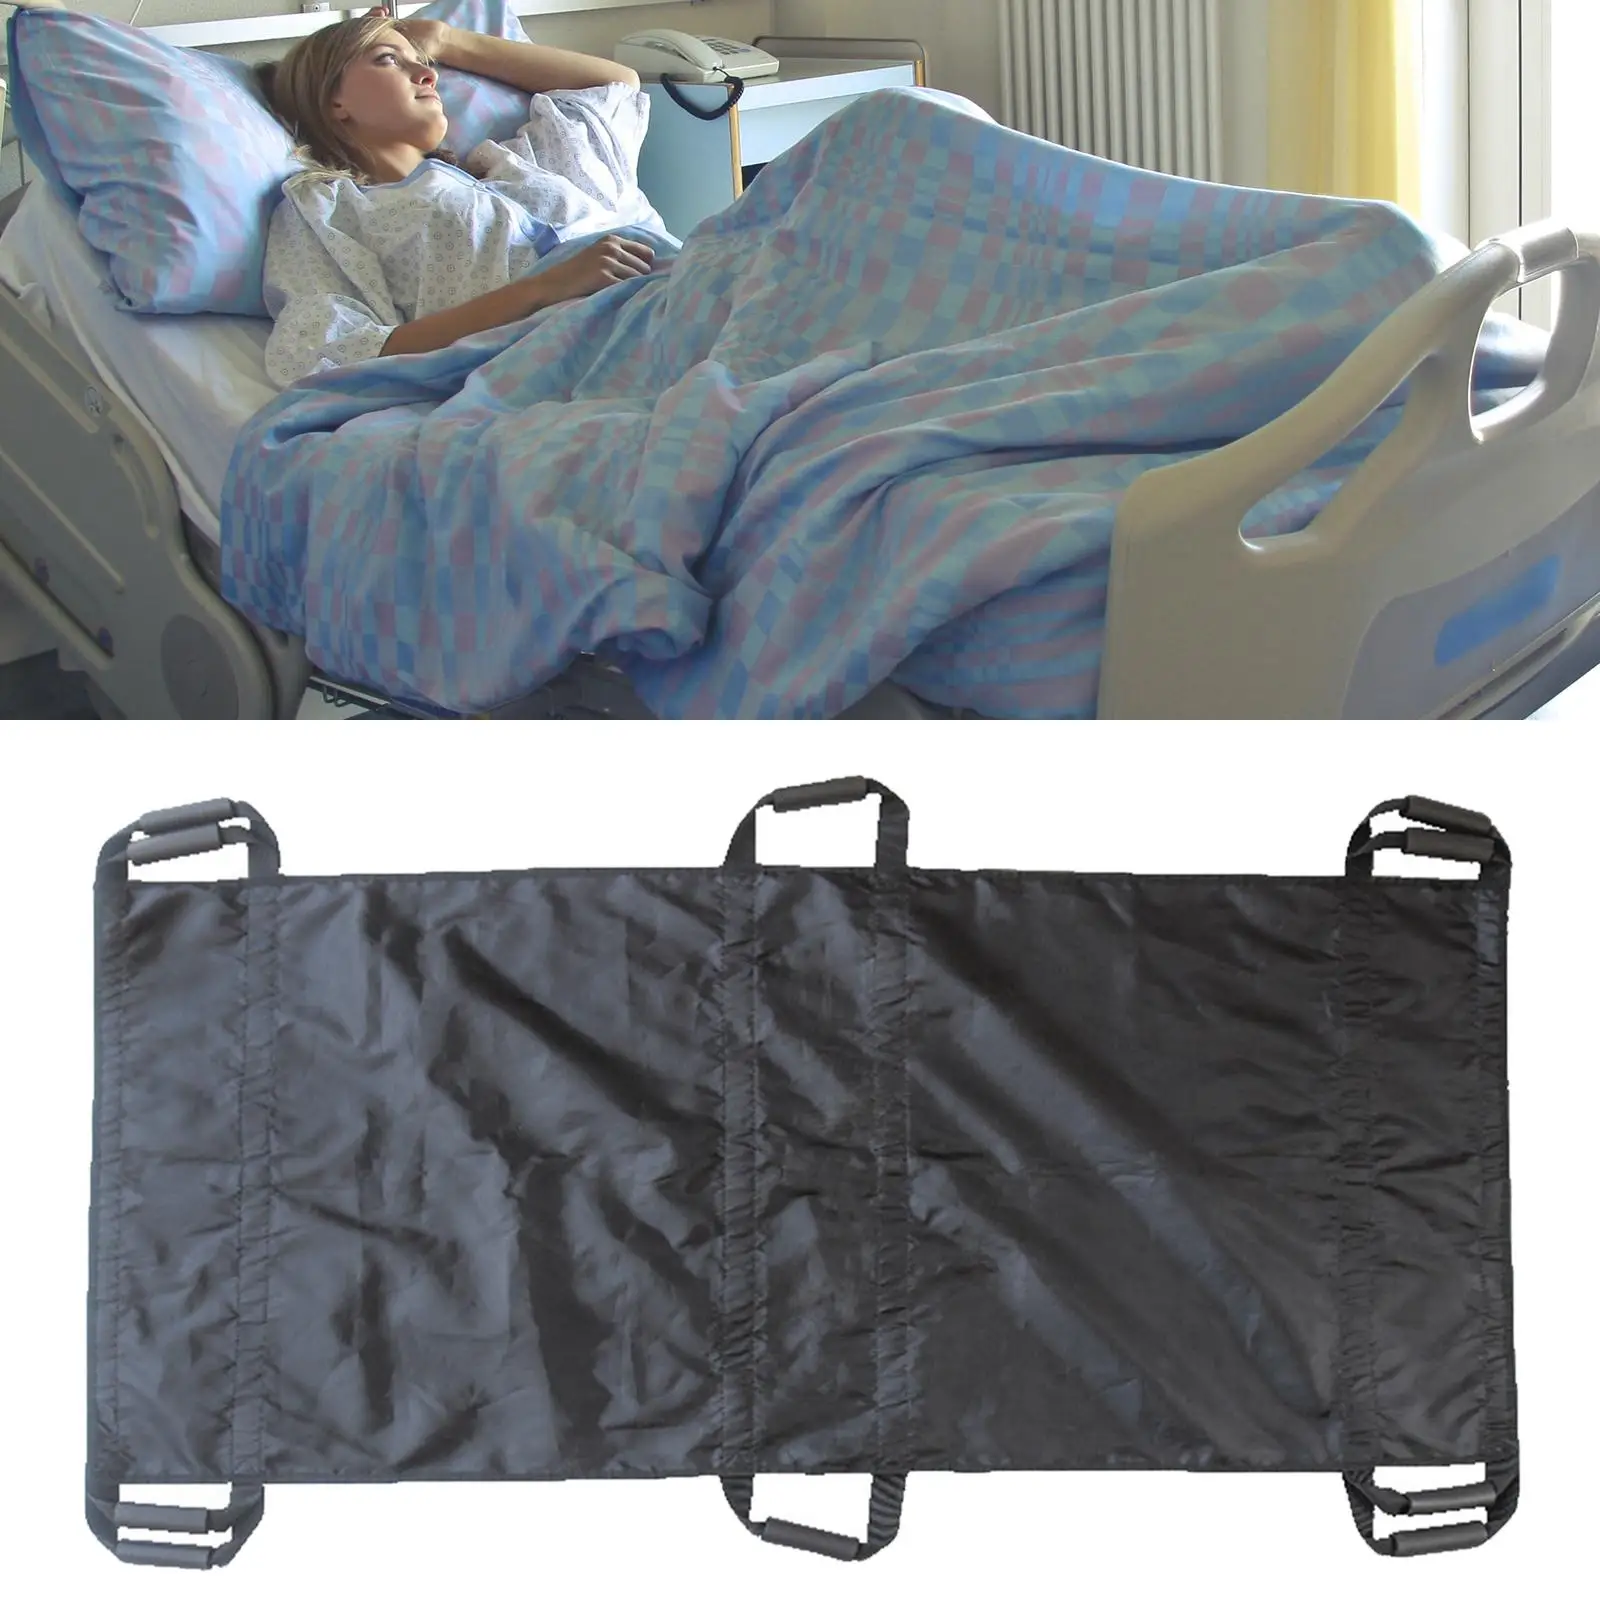 Positioning Bed Pillow Transfer Blanket for Bedridden Elderly Lift Stair Slide Board Transfer Boards Bed Assist